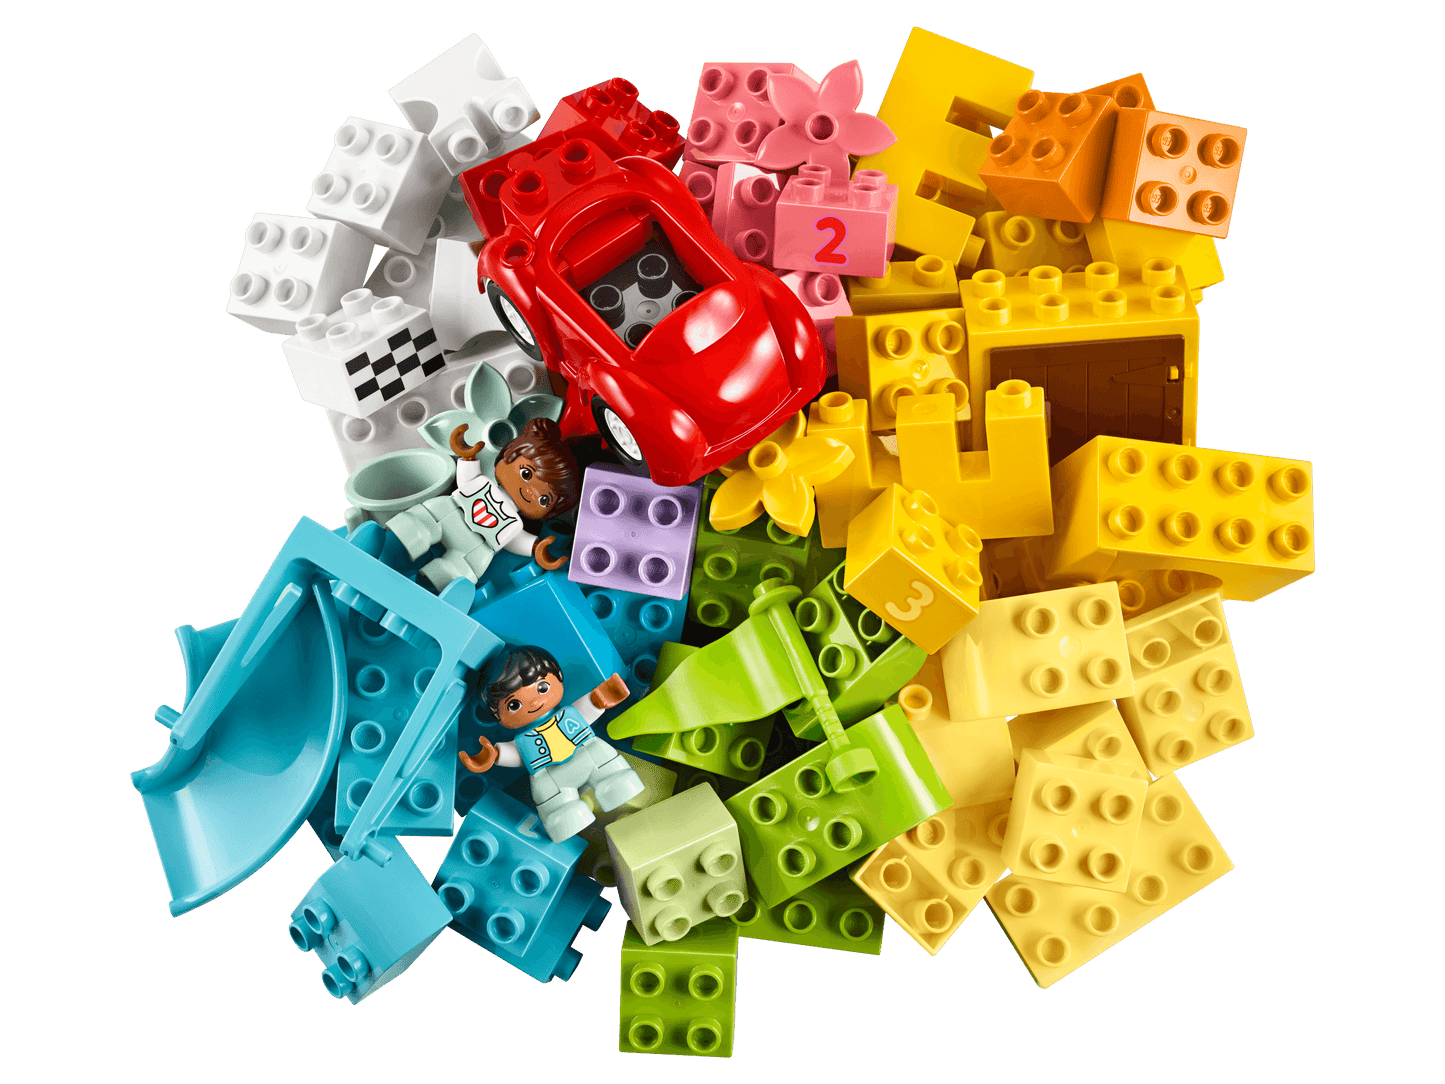 LEGO DUPLO Classic Deluxe Brick Box 10914 - 85 Piece Building Toy